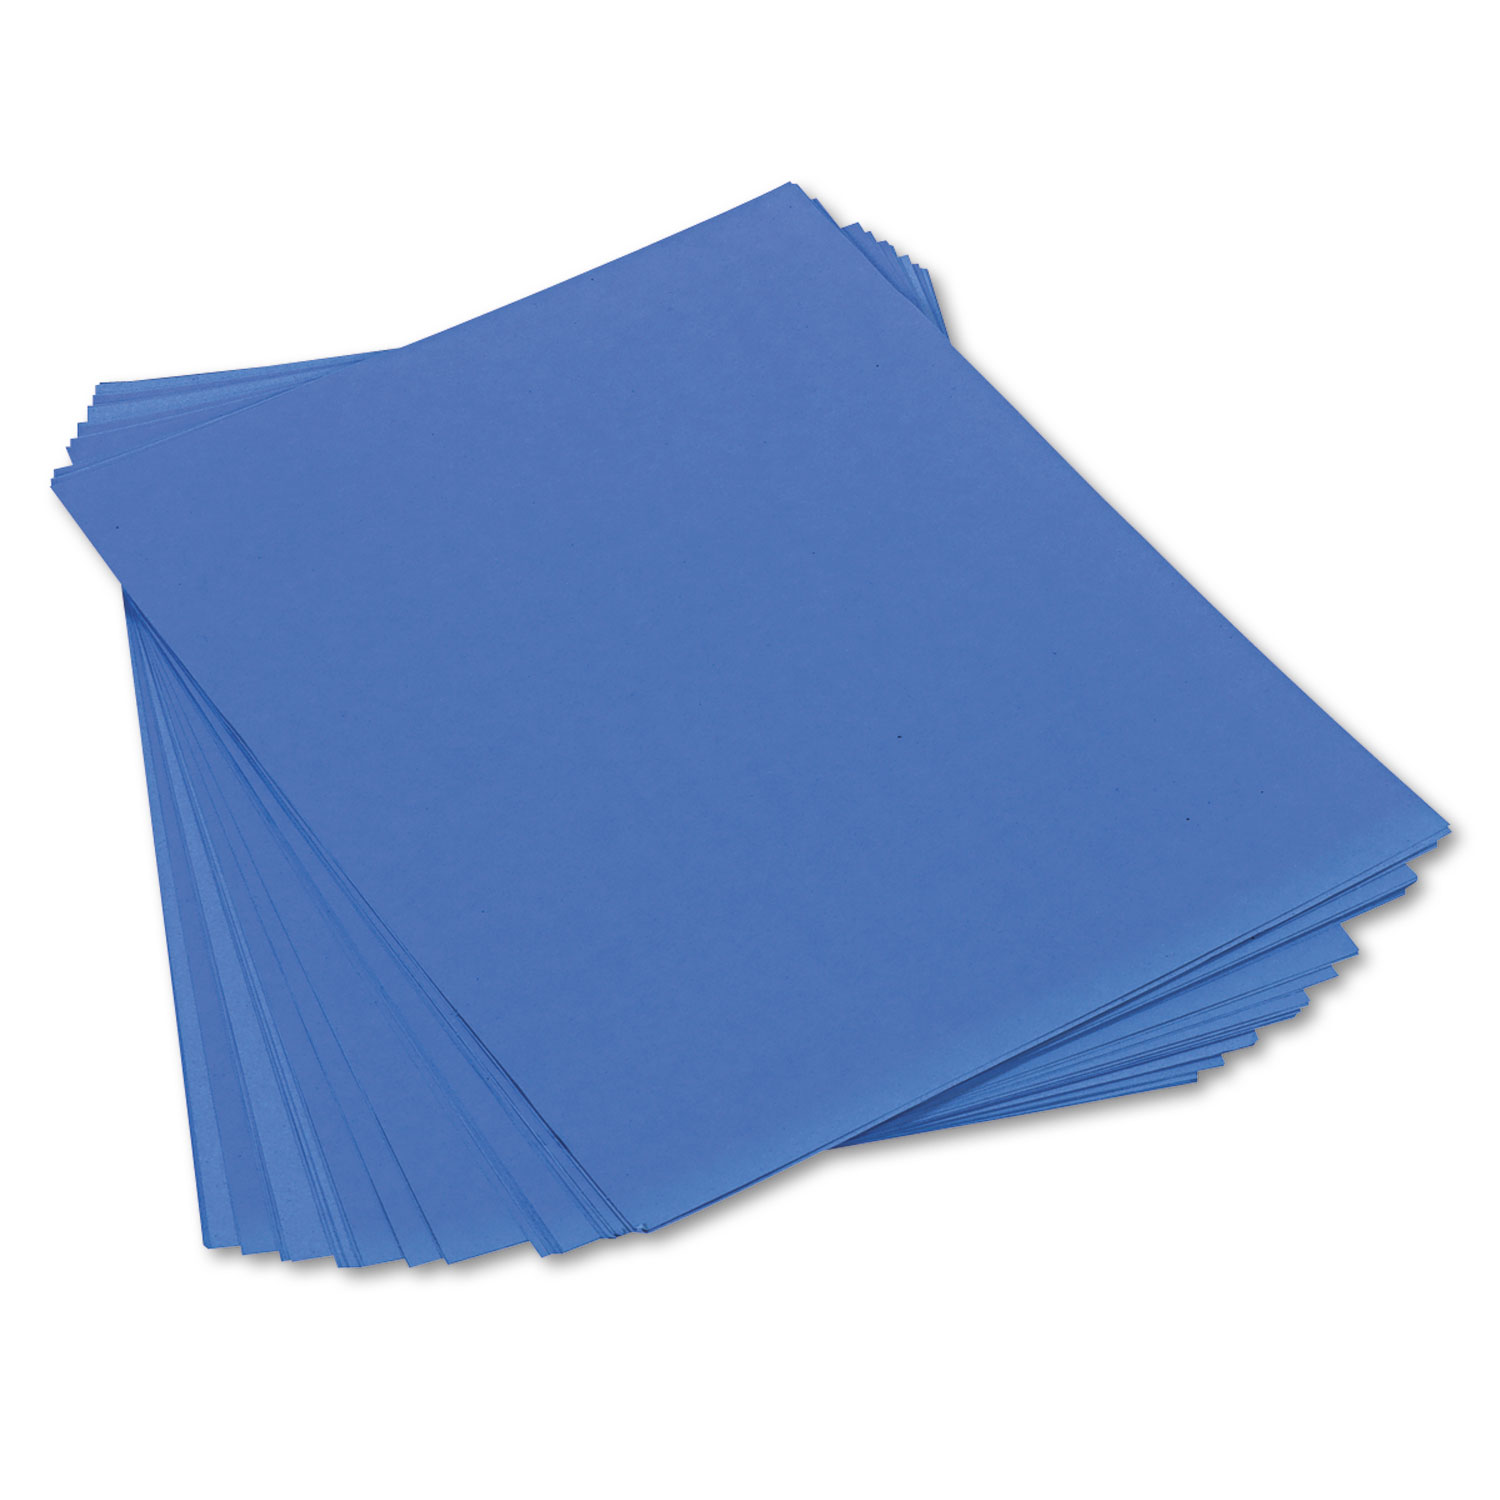 Tru-Ray Construction Paper, 76 lb Text Weight, 18 x 24, Blue, 50